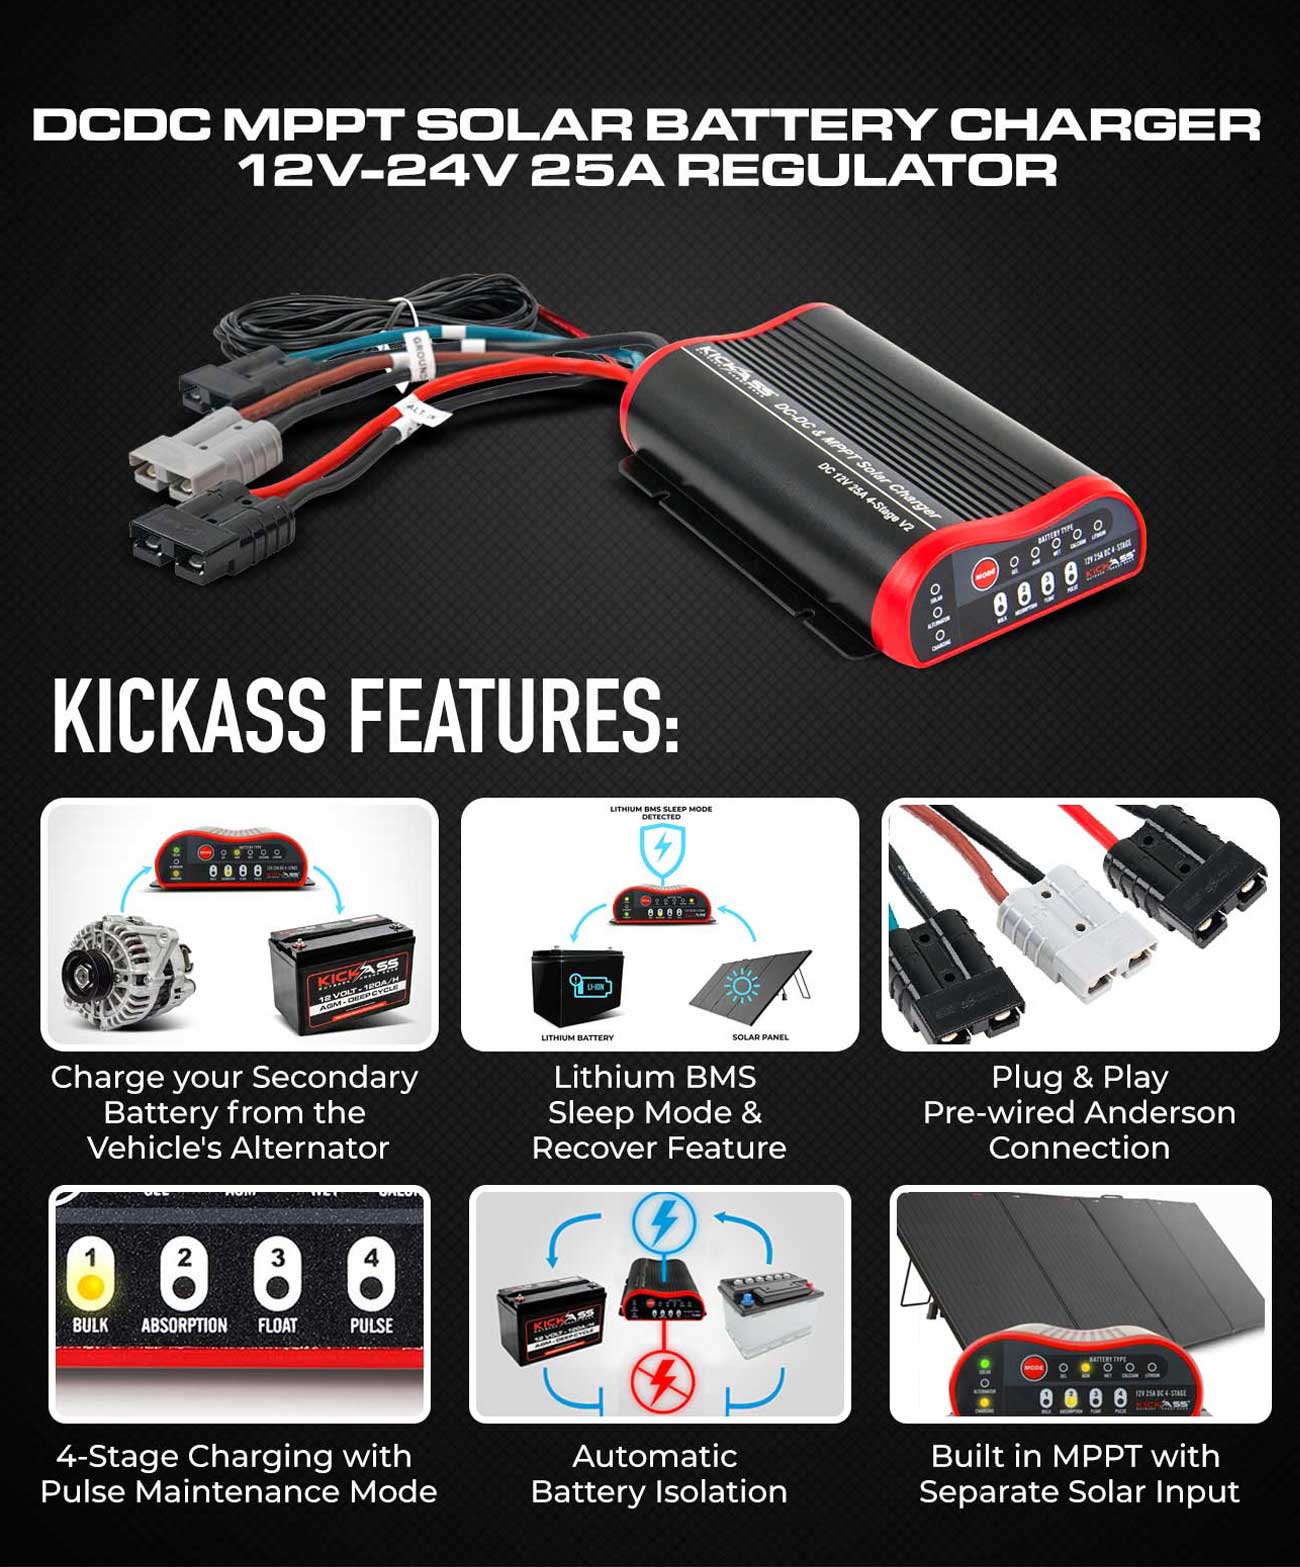 KickAss 12V 120Ah Slimline LiFePO4 Lithium Battery Value Bundle